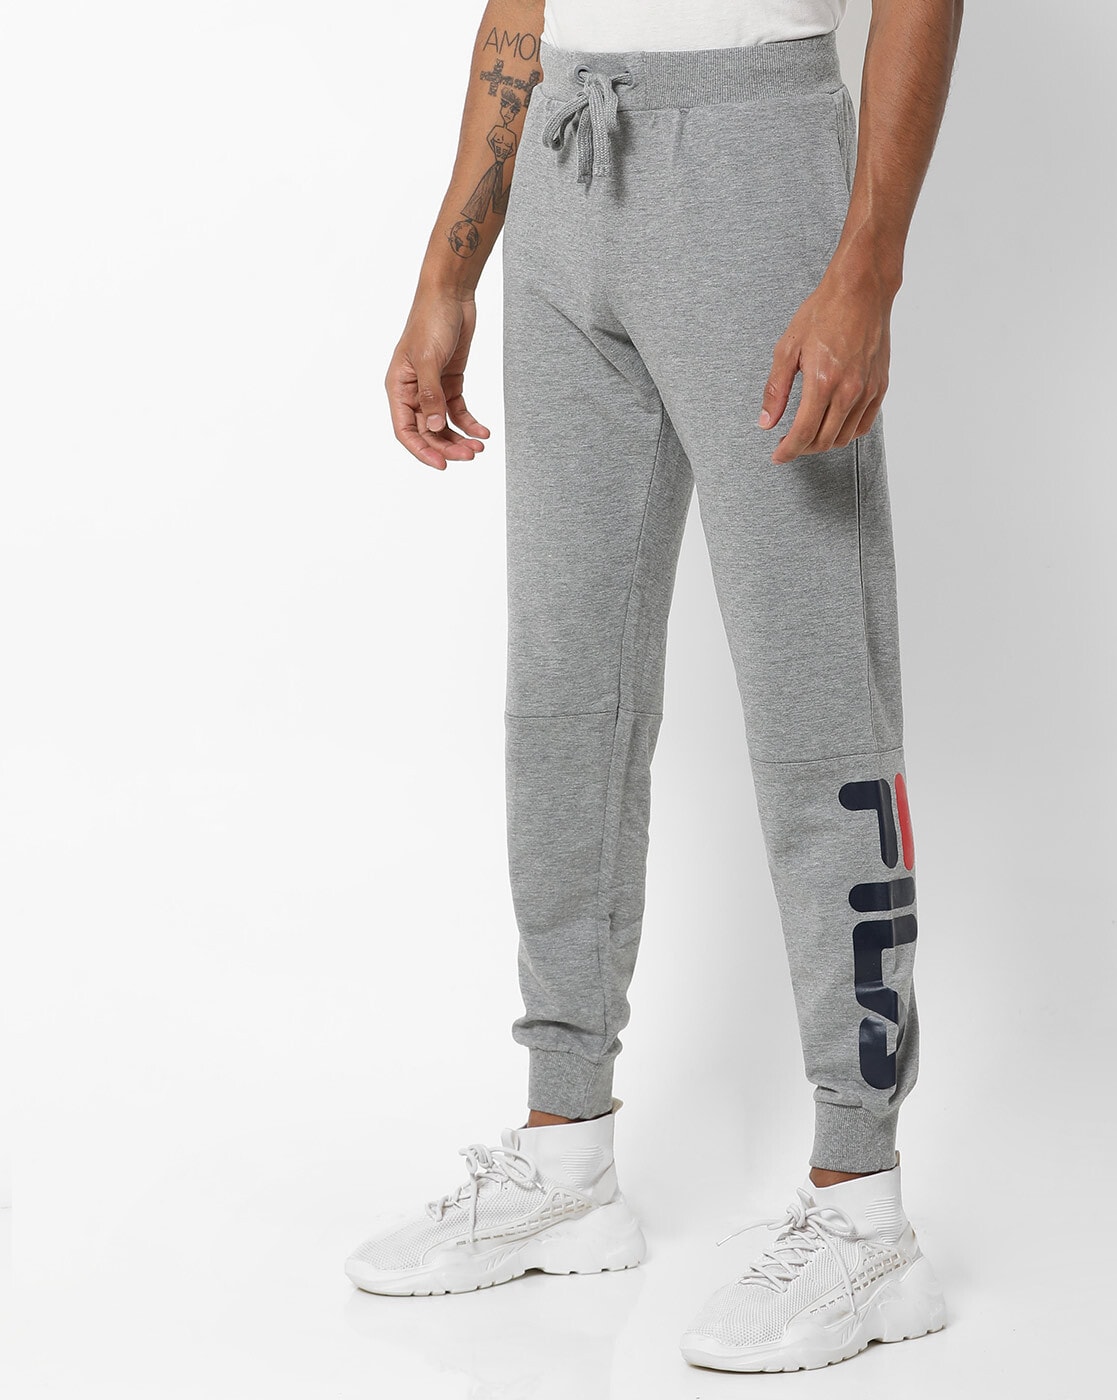 Buy Fila Men Slim Fit Track Pants12012148BLKS at Amazonin